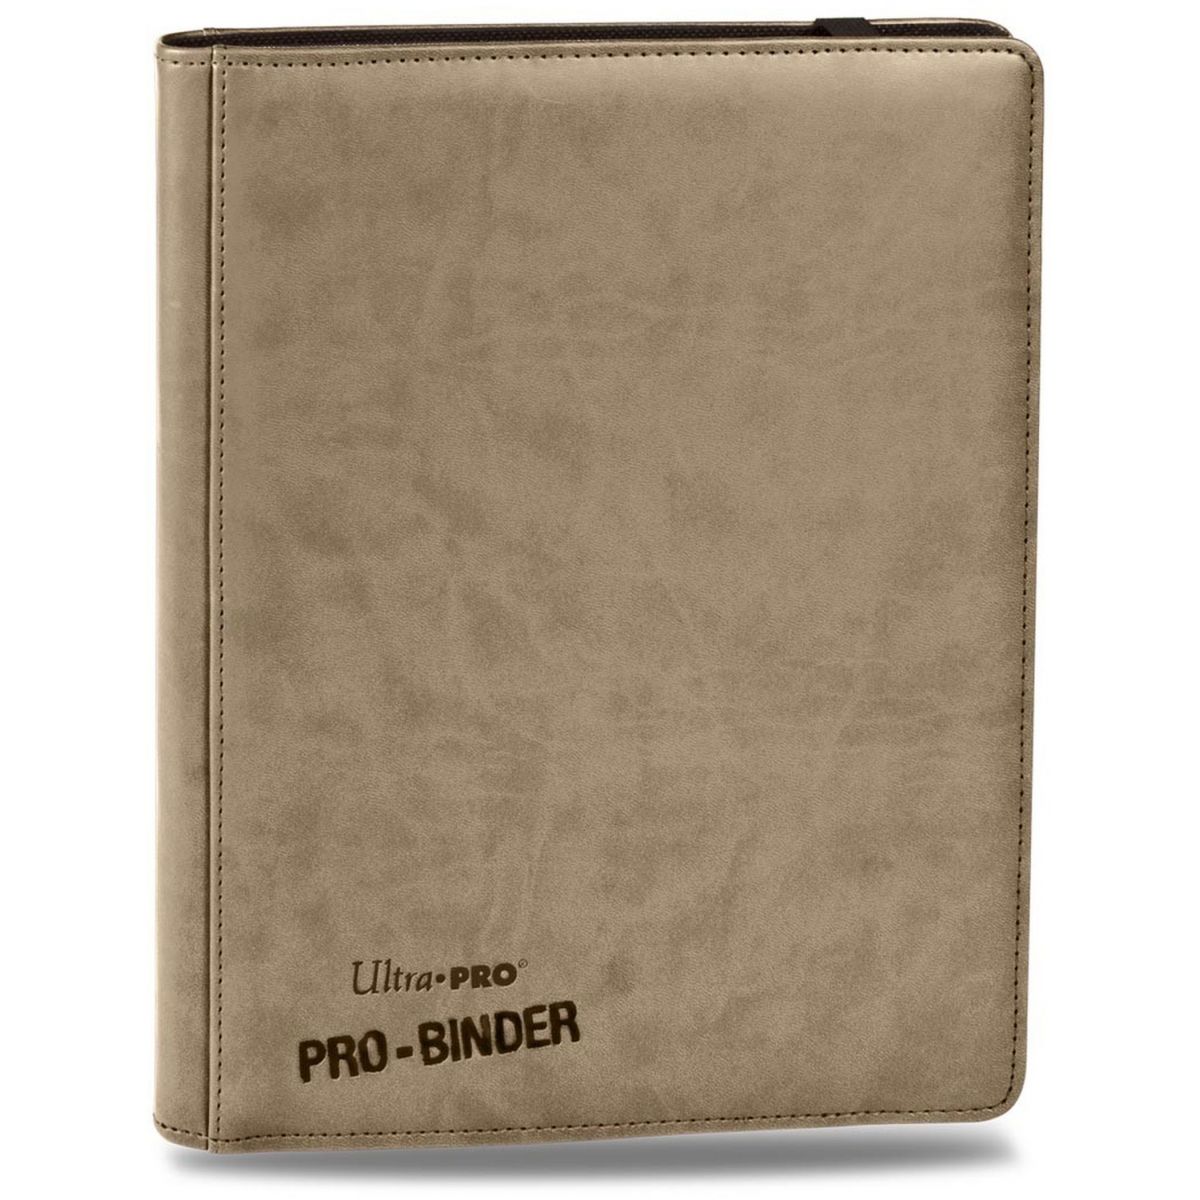 Pro Binder Premium - 9 Cases / 360 Emplacements - Blanc